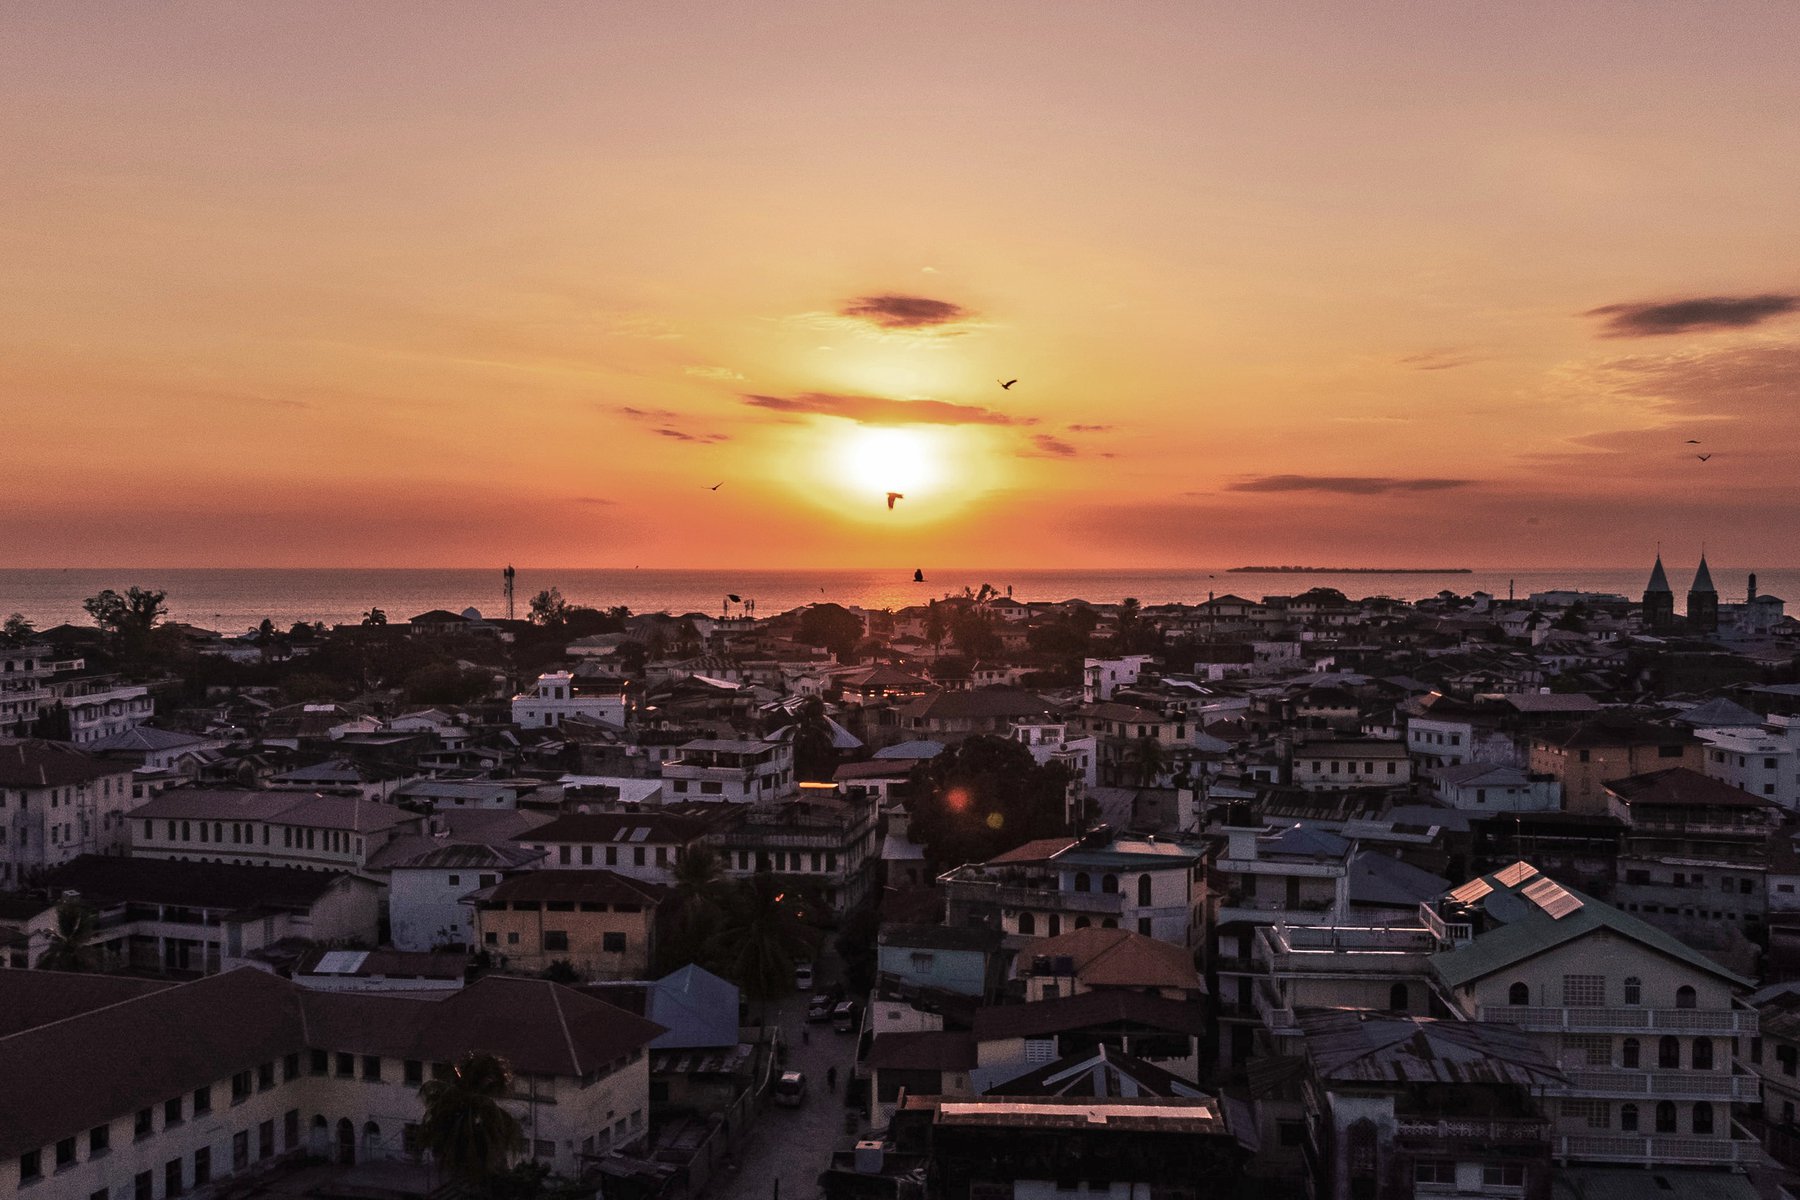 Stone Town på Zanzibar i solnedgång